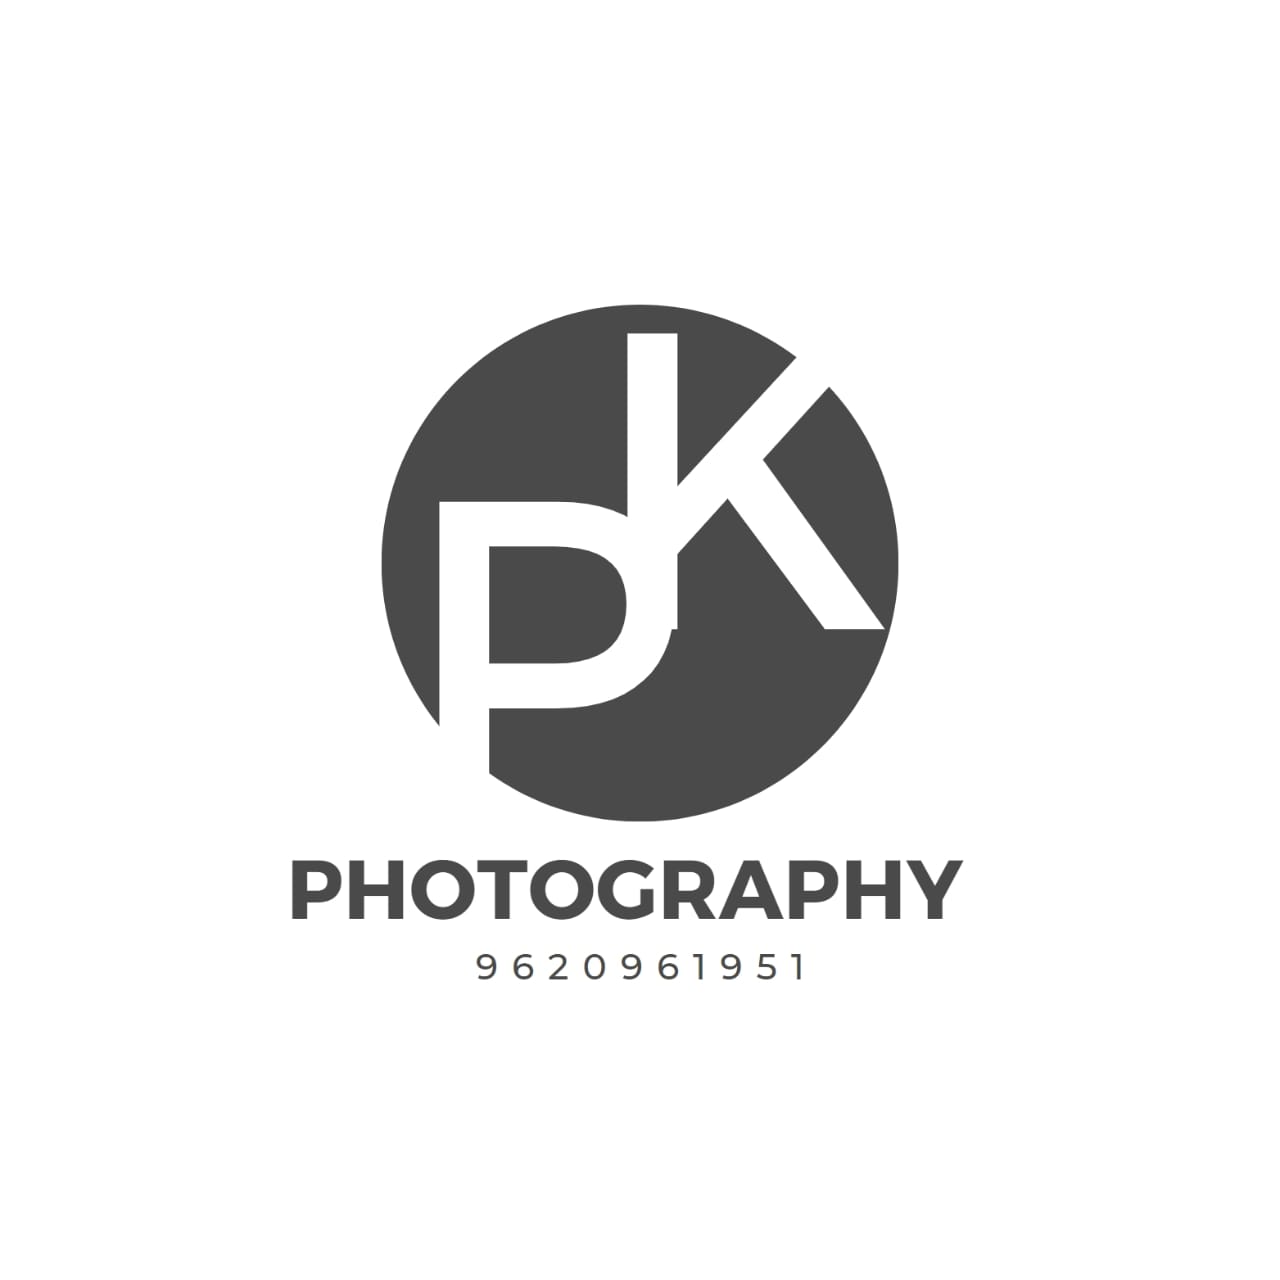 Khawar Projects :: Photos, videos, logos, illustrations and branding ::  Behance